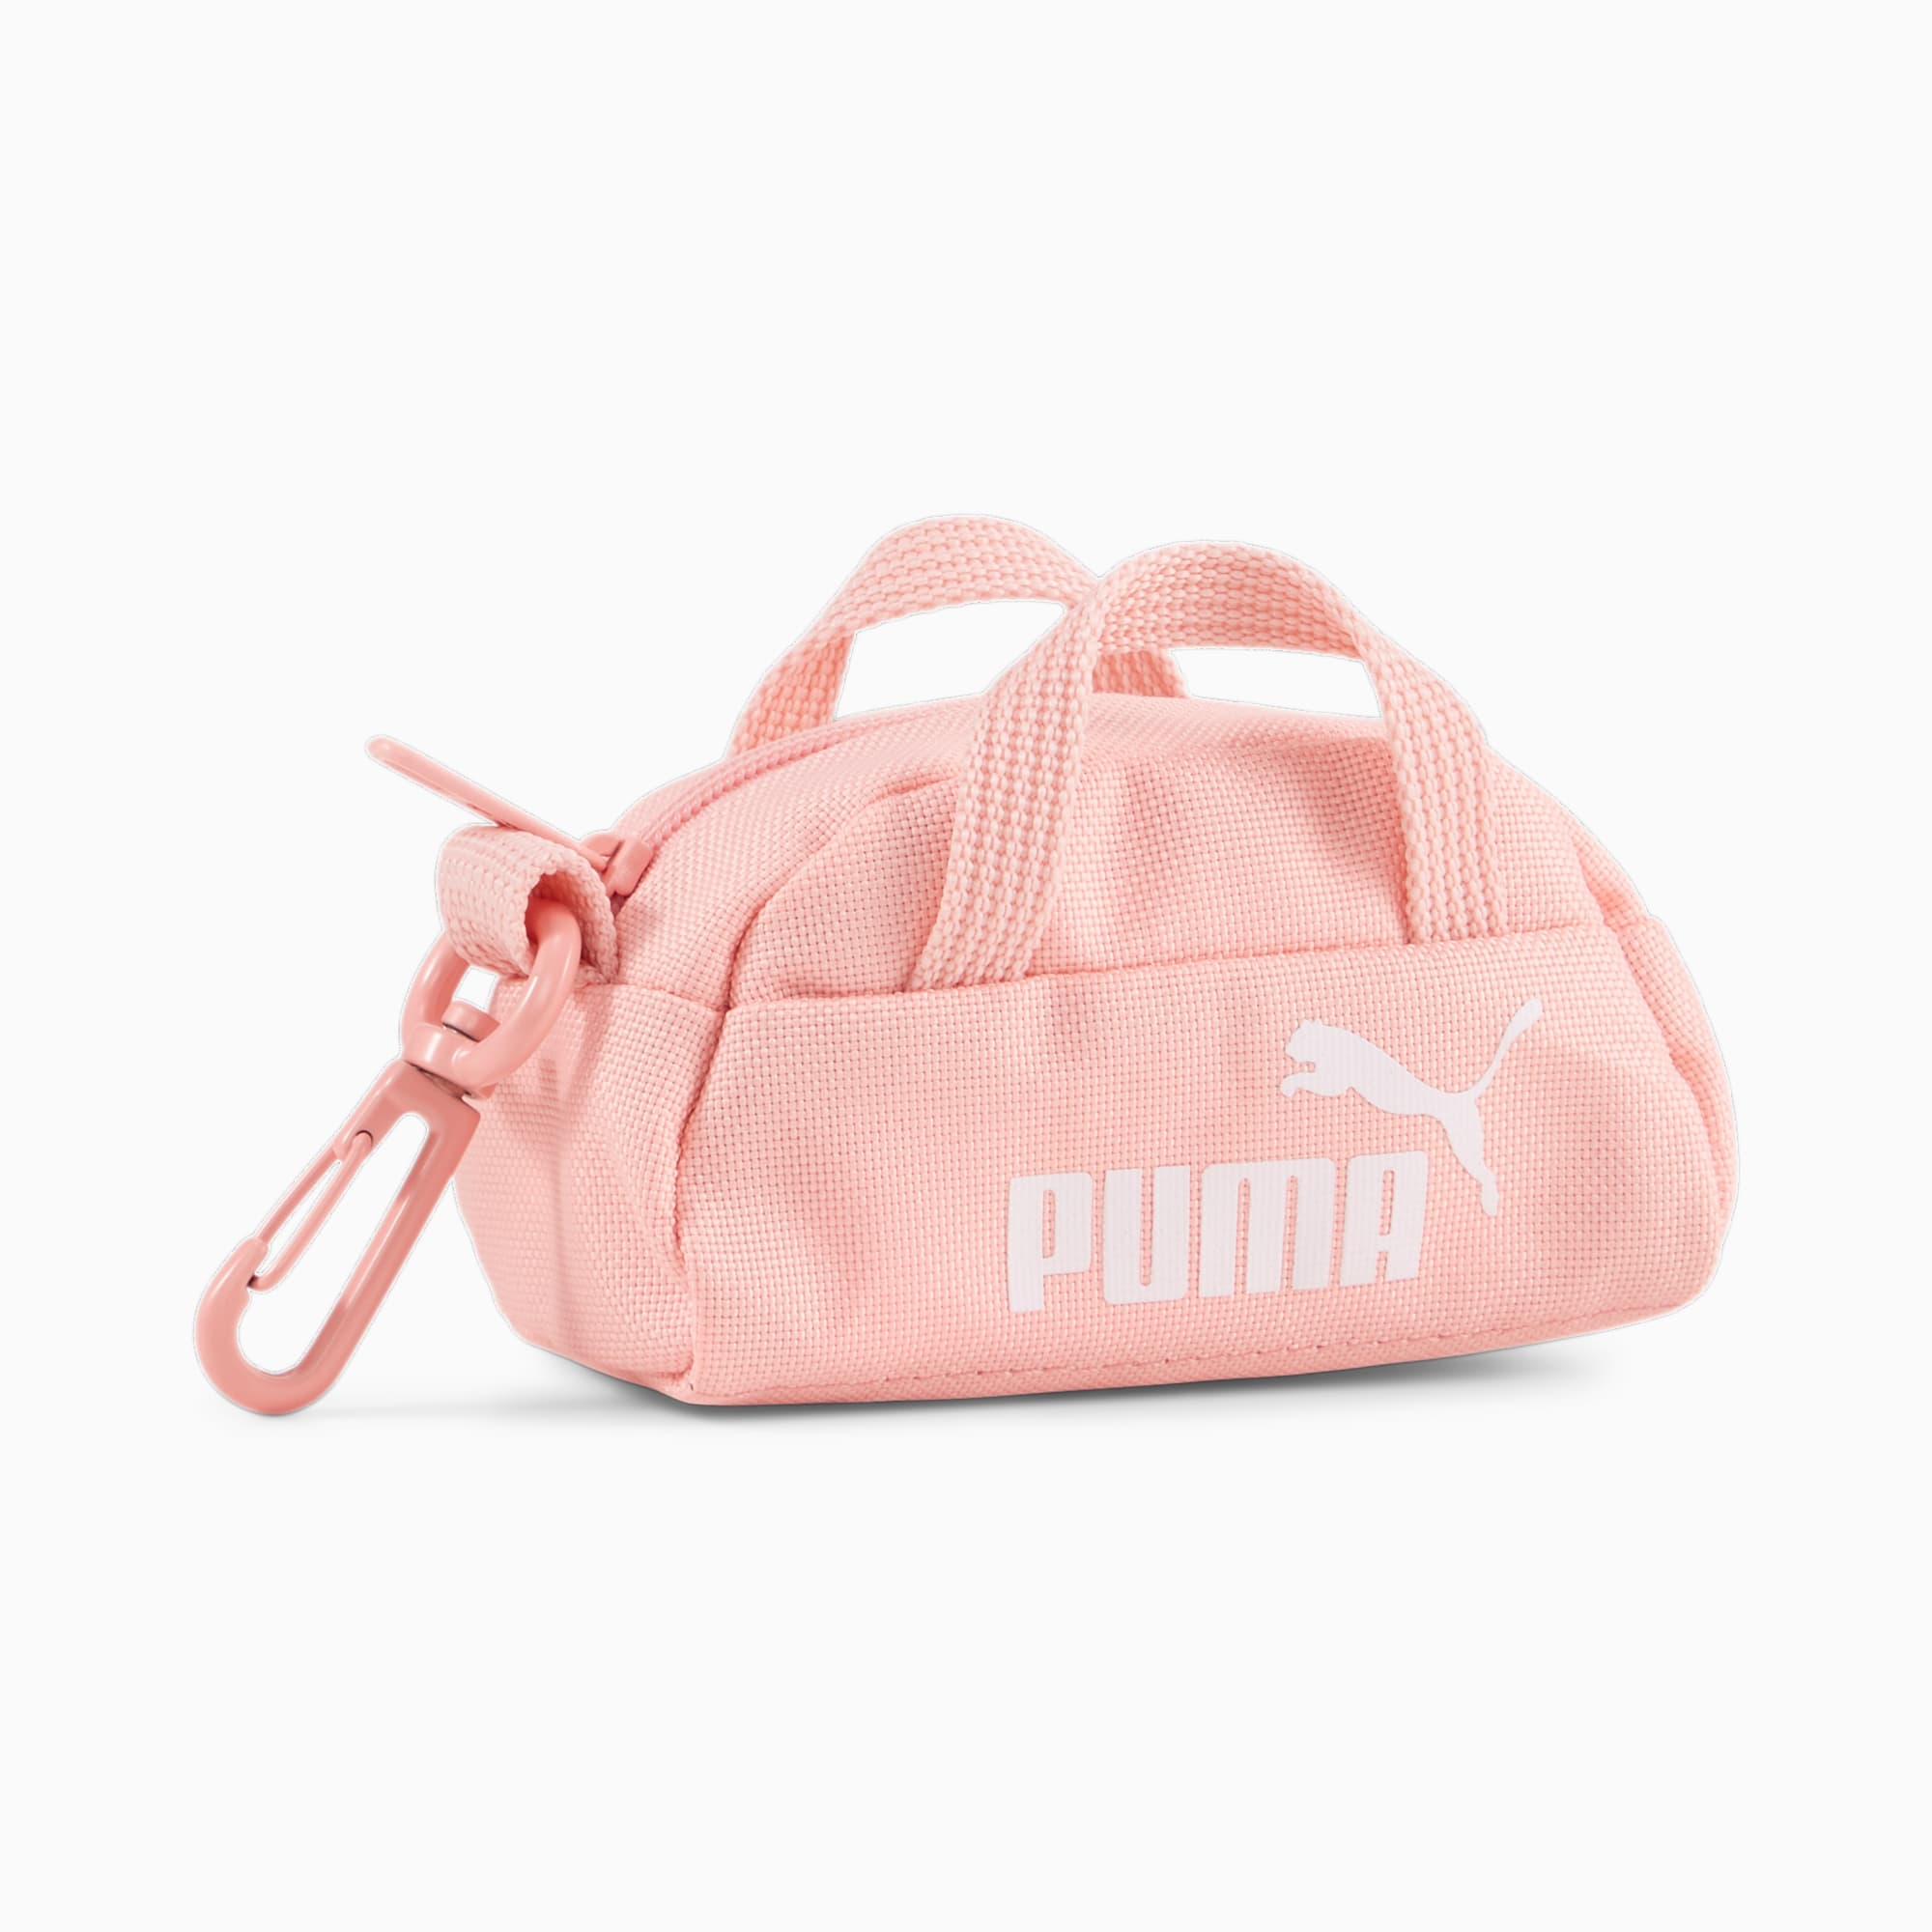 PUMA Sports Bag All | Shop | PUMA PUMA Phase Tiny Puma